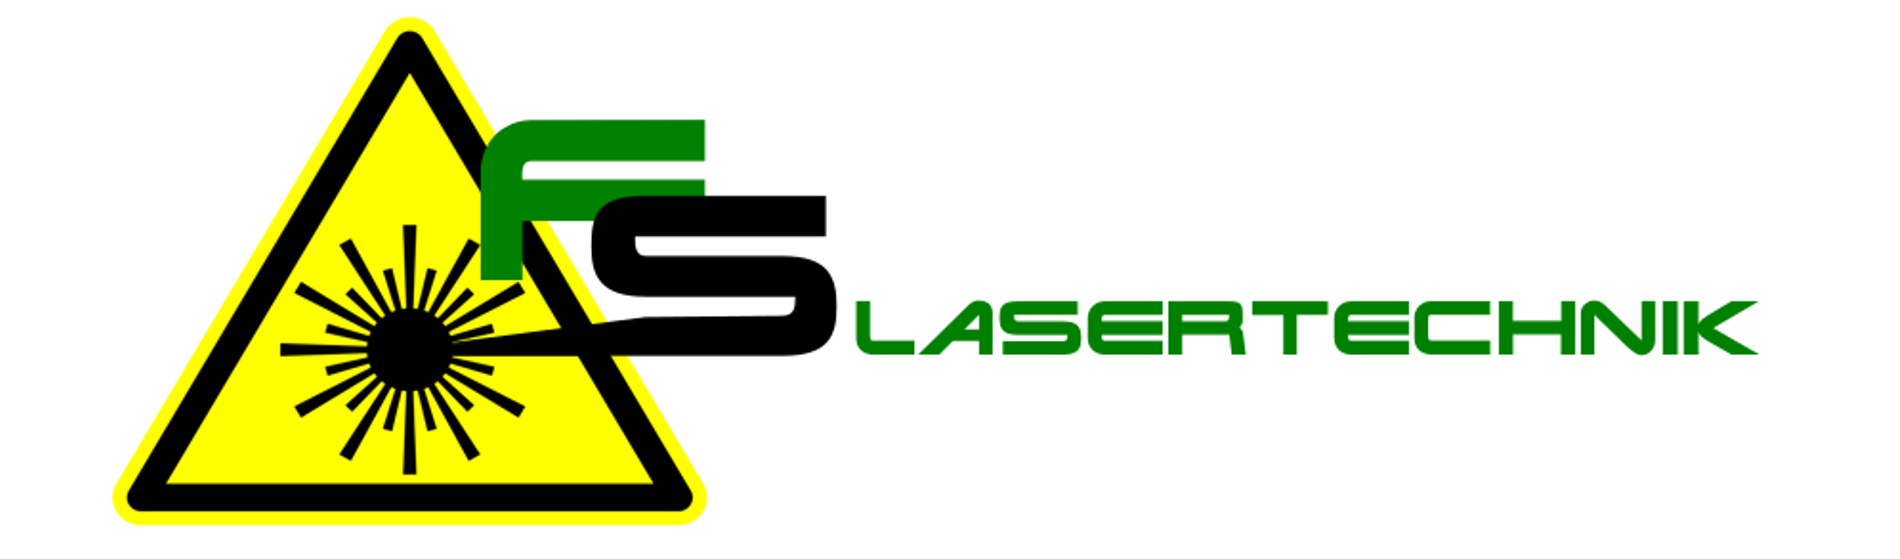 FS - Lasertechnik